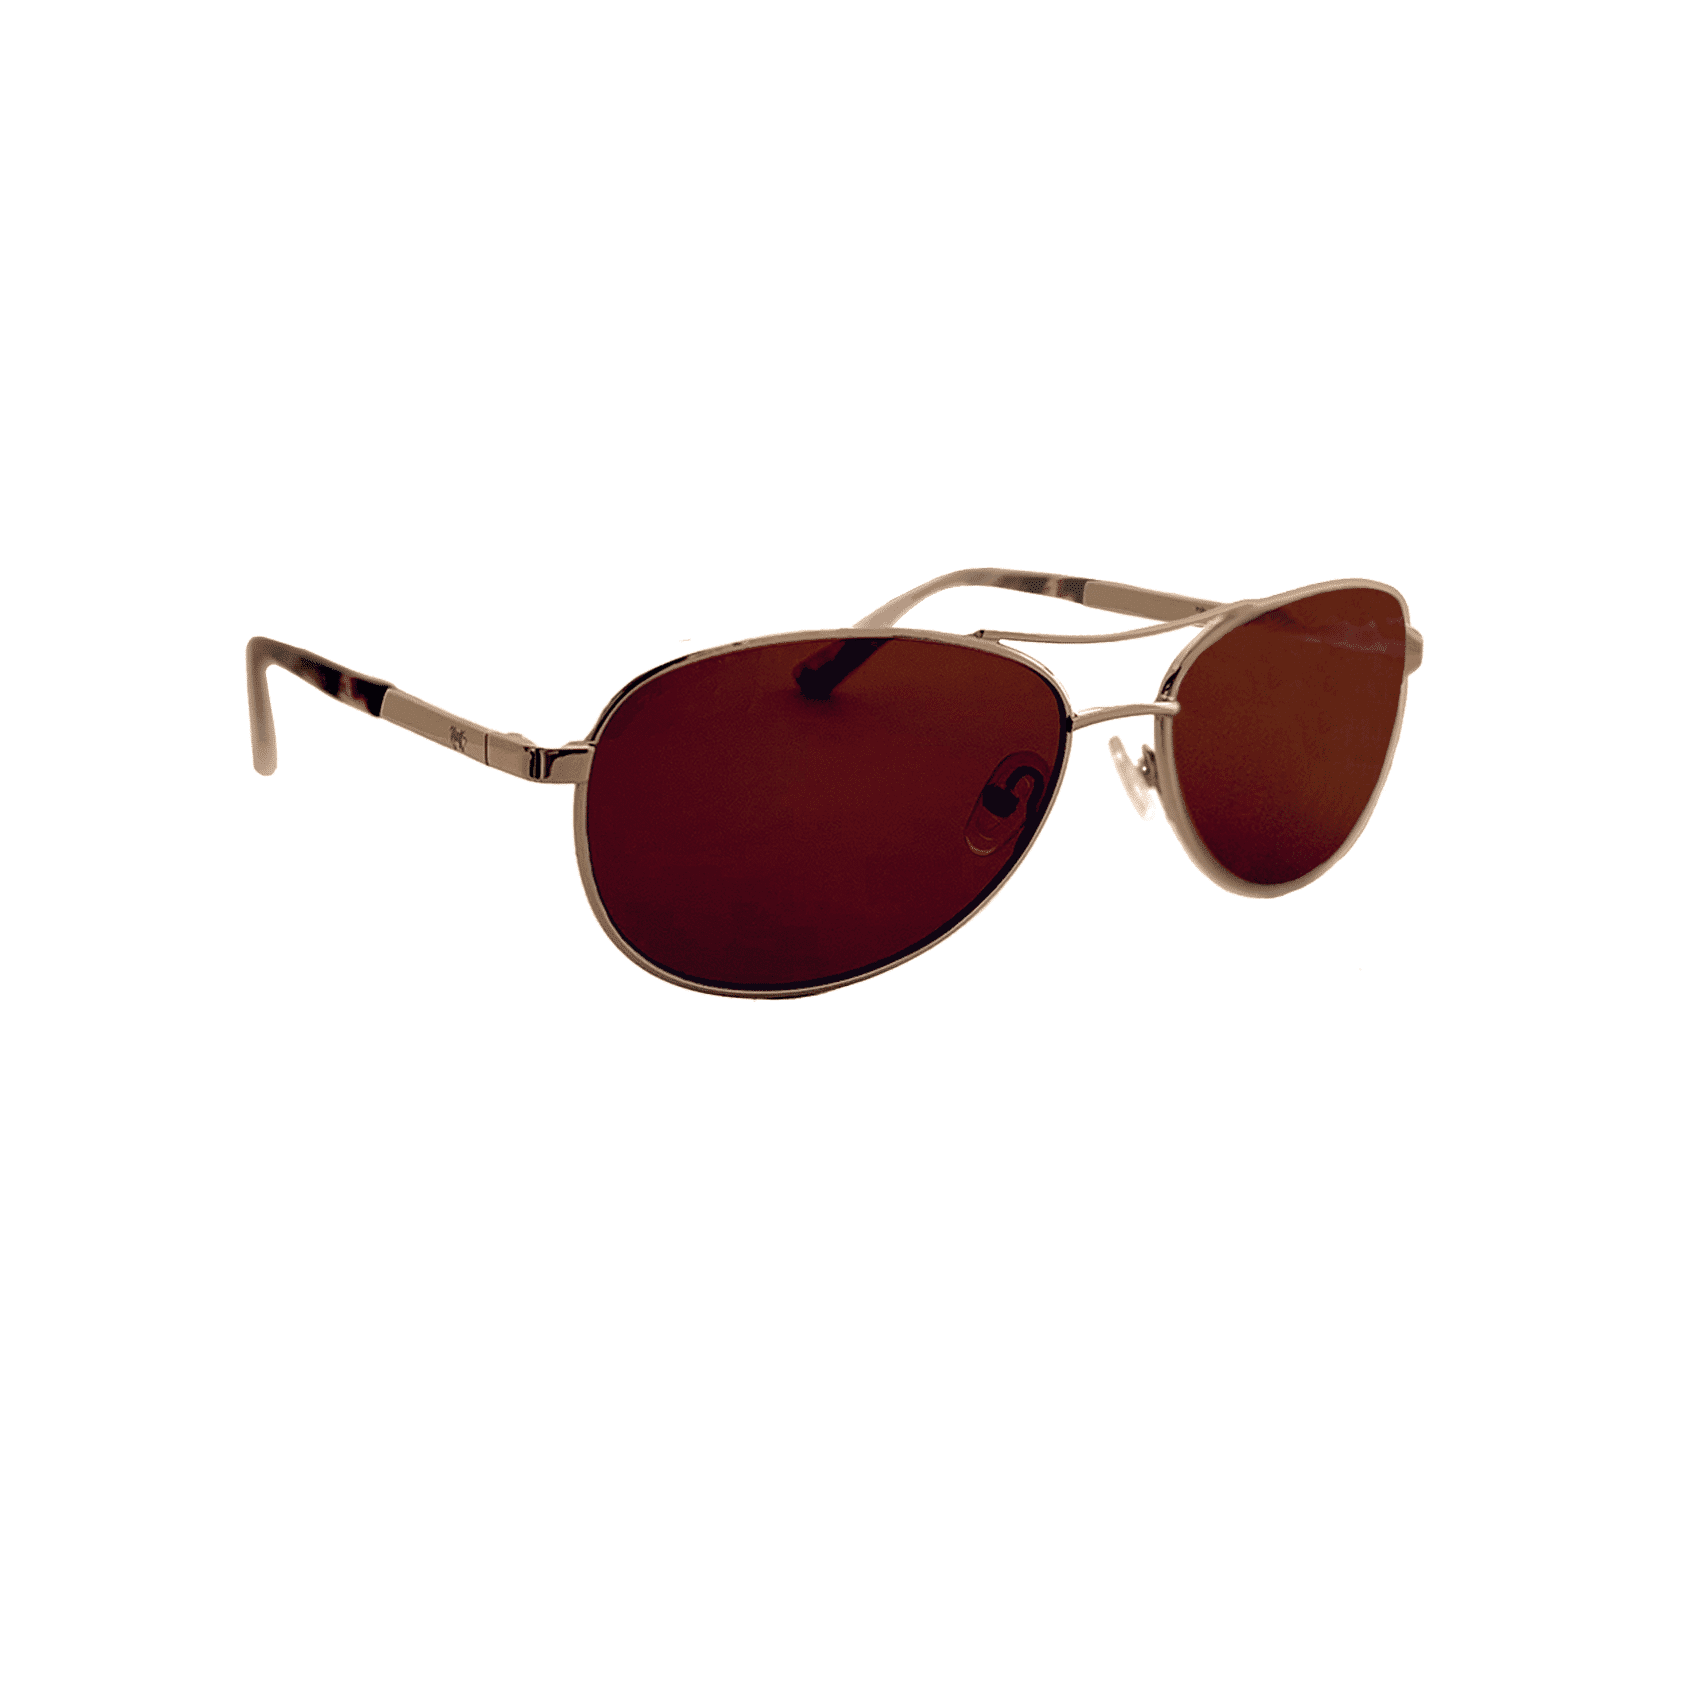 Best Polarized Sunglasses, Small Fitting Sunglass, Aviator Sunglass | Hook Sunglasses